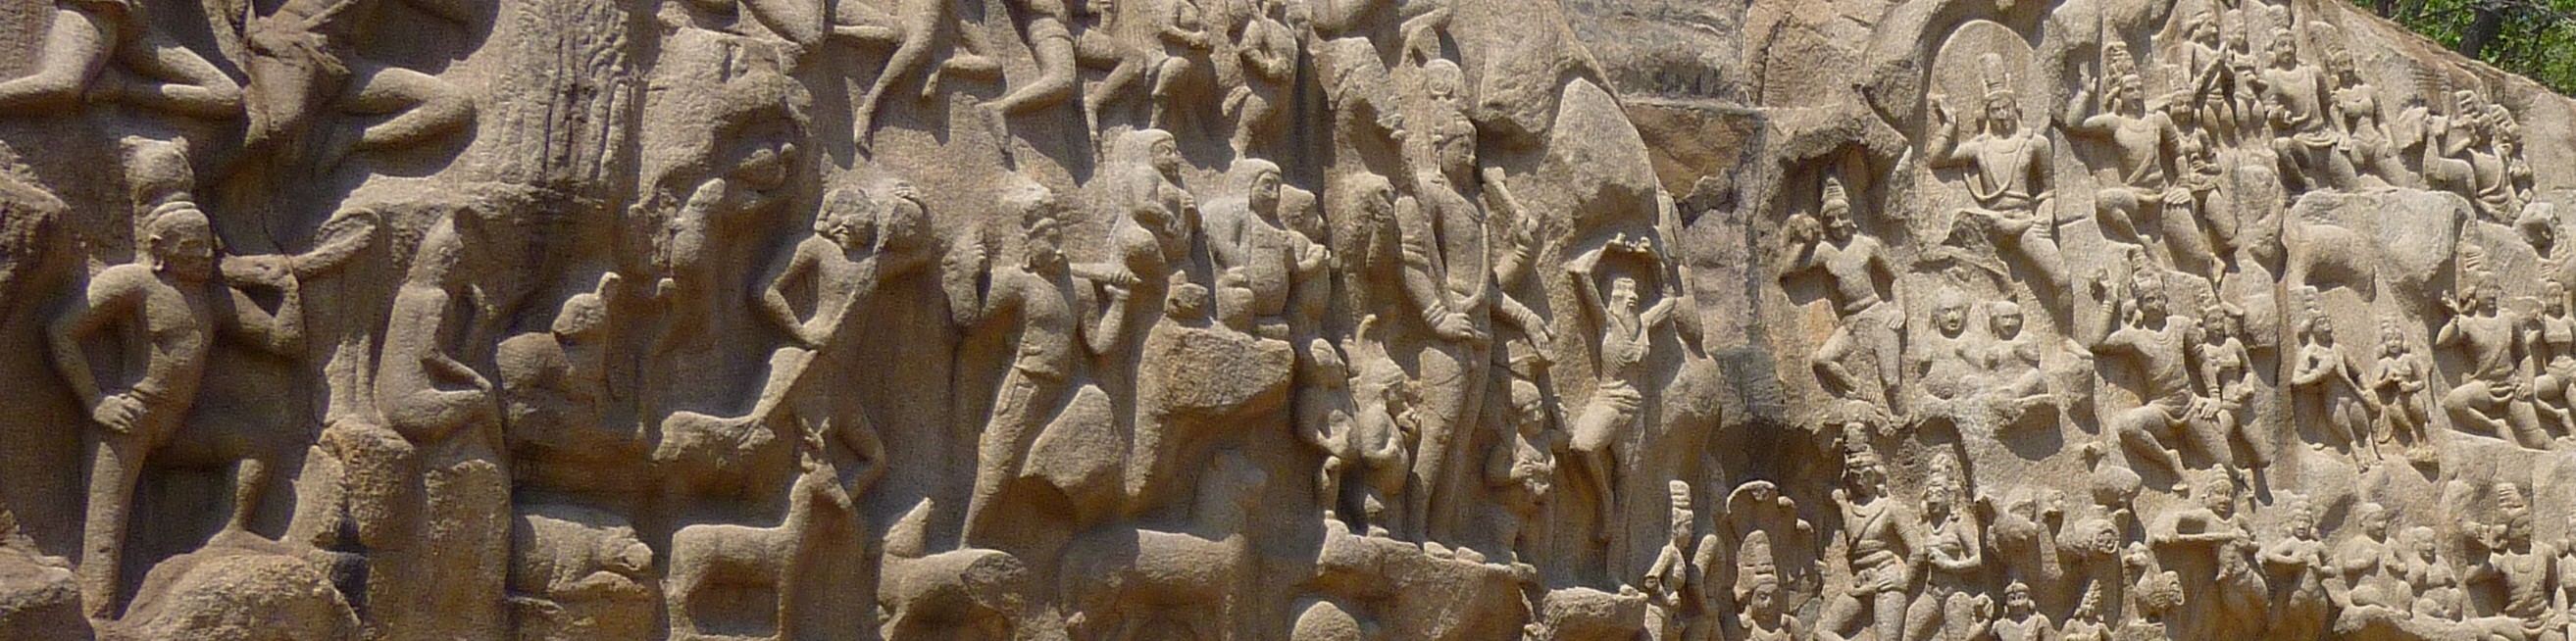 Arjuna’s Penance (7th century)